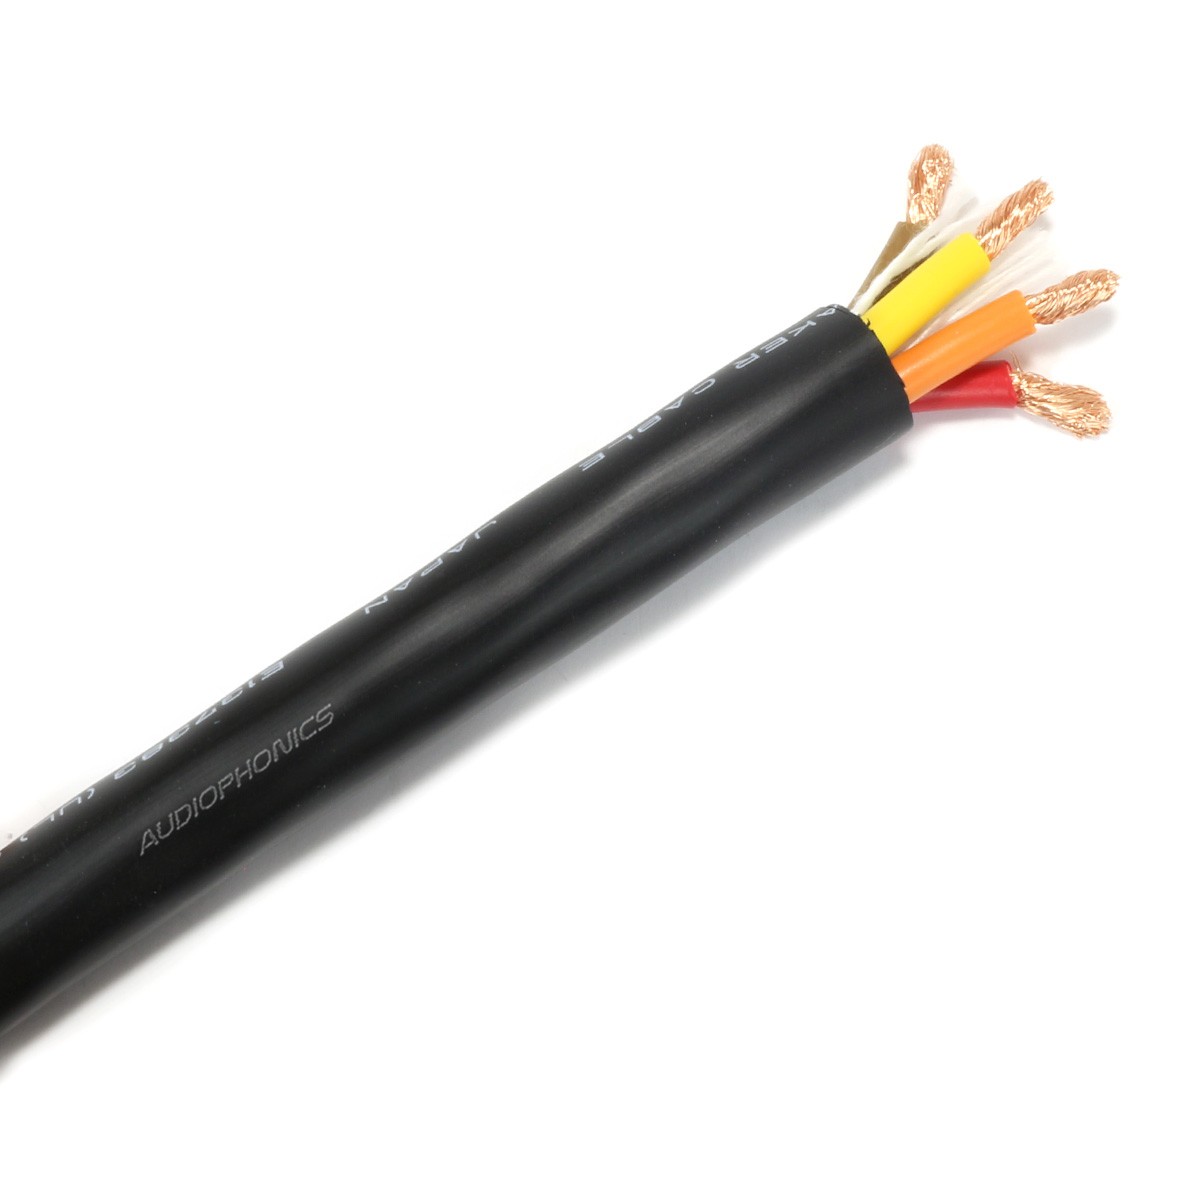 [GRADE S] MOGAMI W3104 OFC Copper Speaker Cable 4x4.0mm² Ø 14.5mm 1m